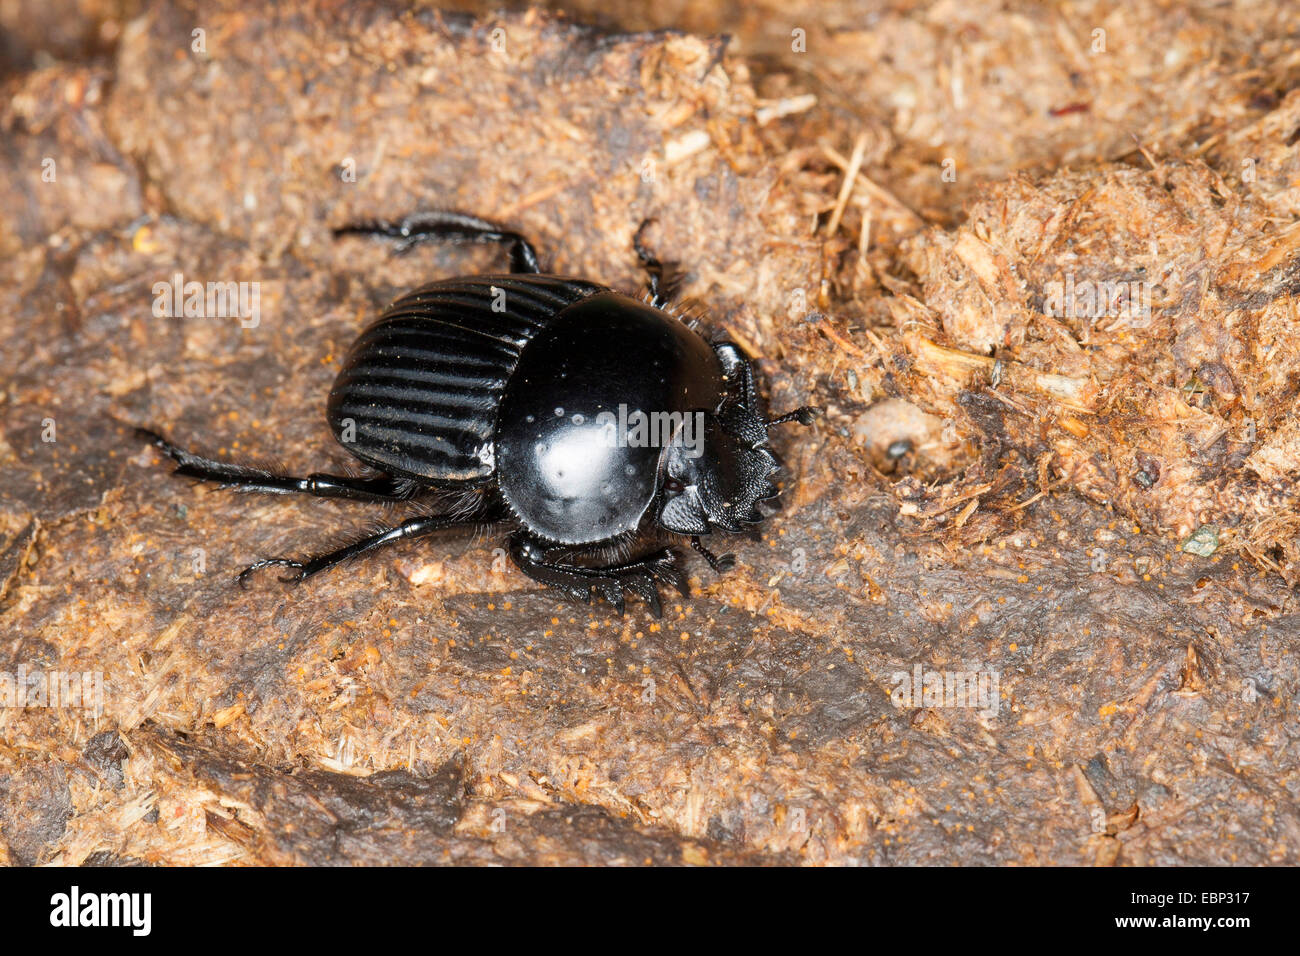 Scarab dung beetle, Dung beetle (Scarabaeus laticollis, Ateuchetus laticollis), on bark, France, Corsica Stock Photo